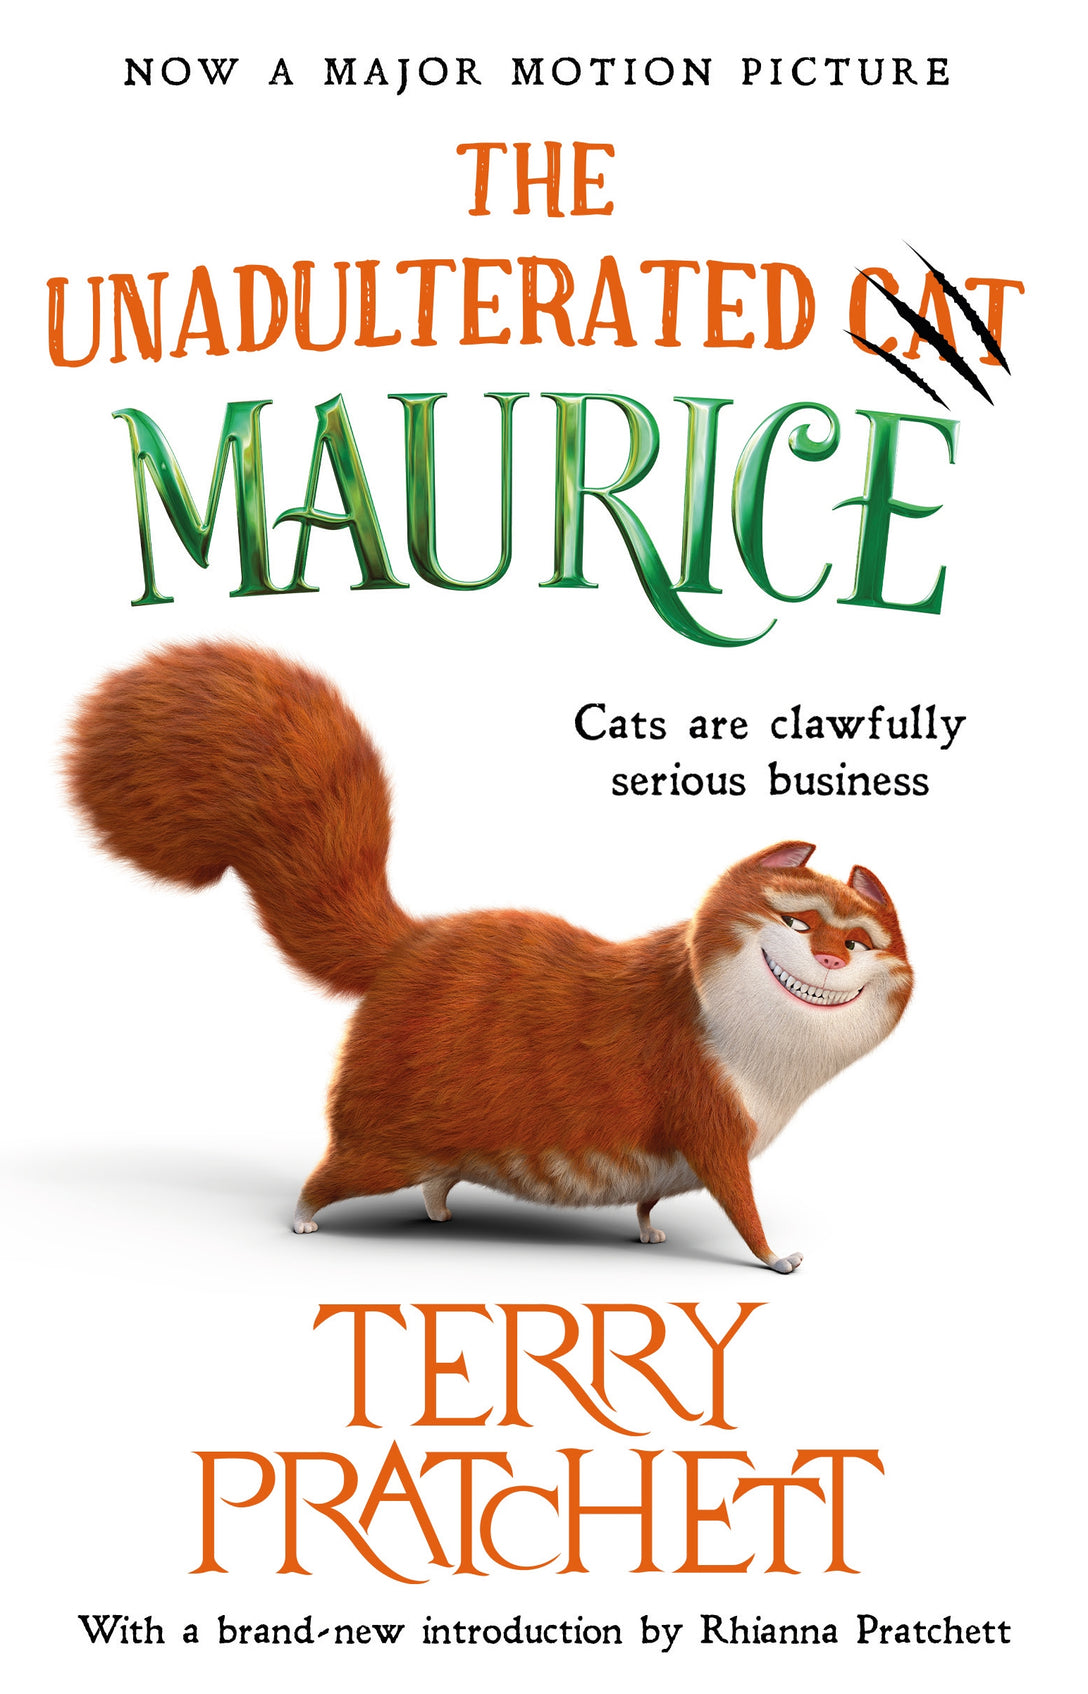 The Unadulterated Cat by Gray Jolliffe, Terry Pratchett